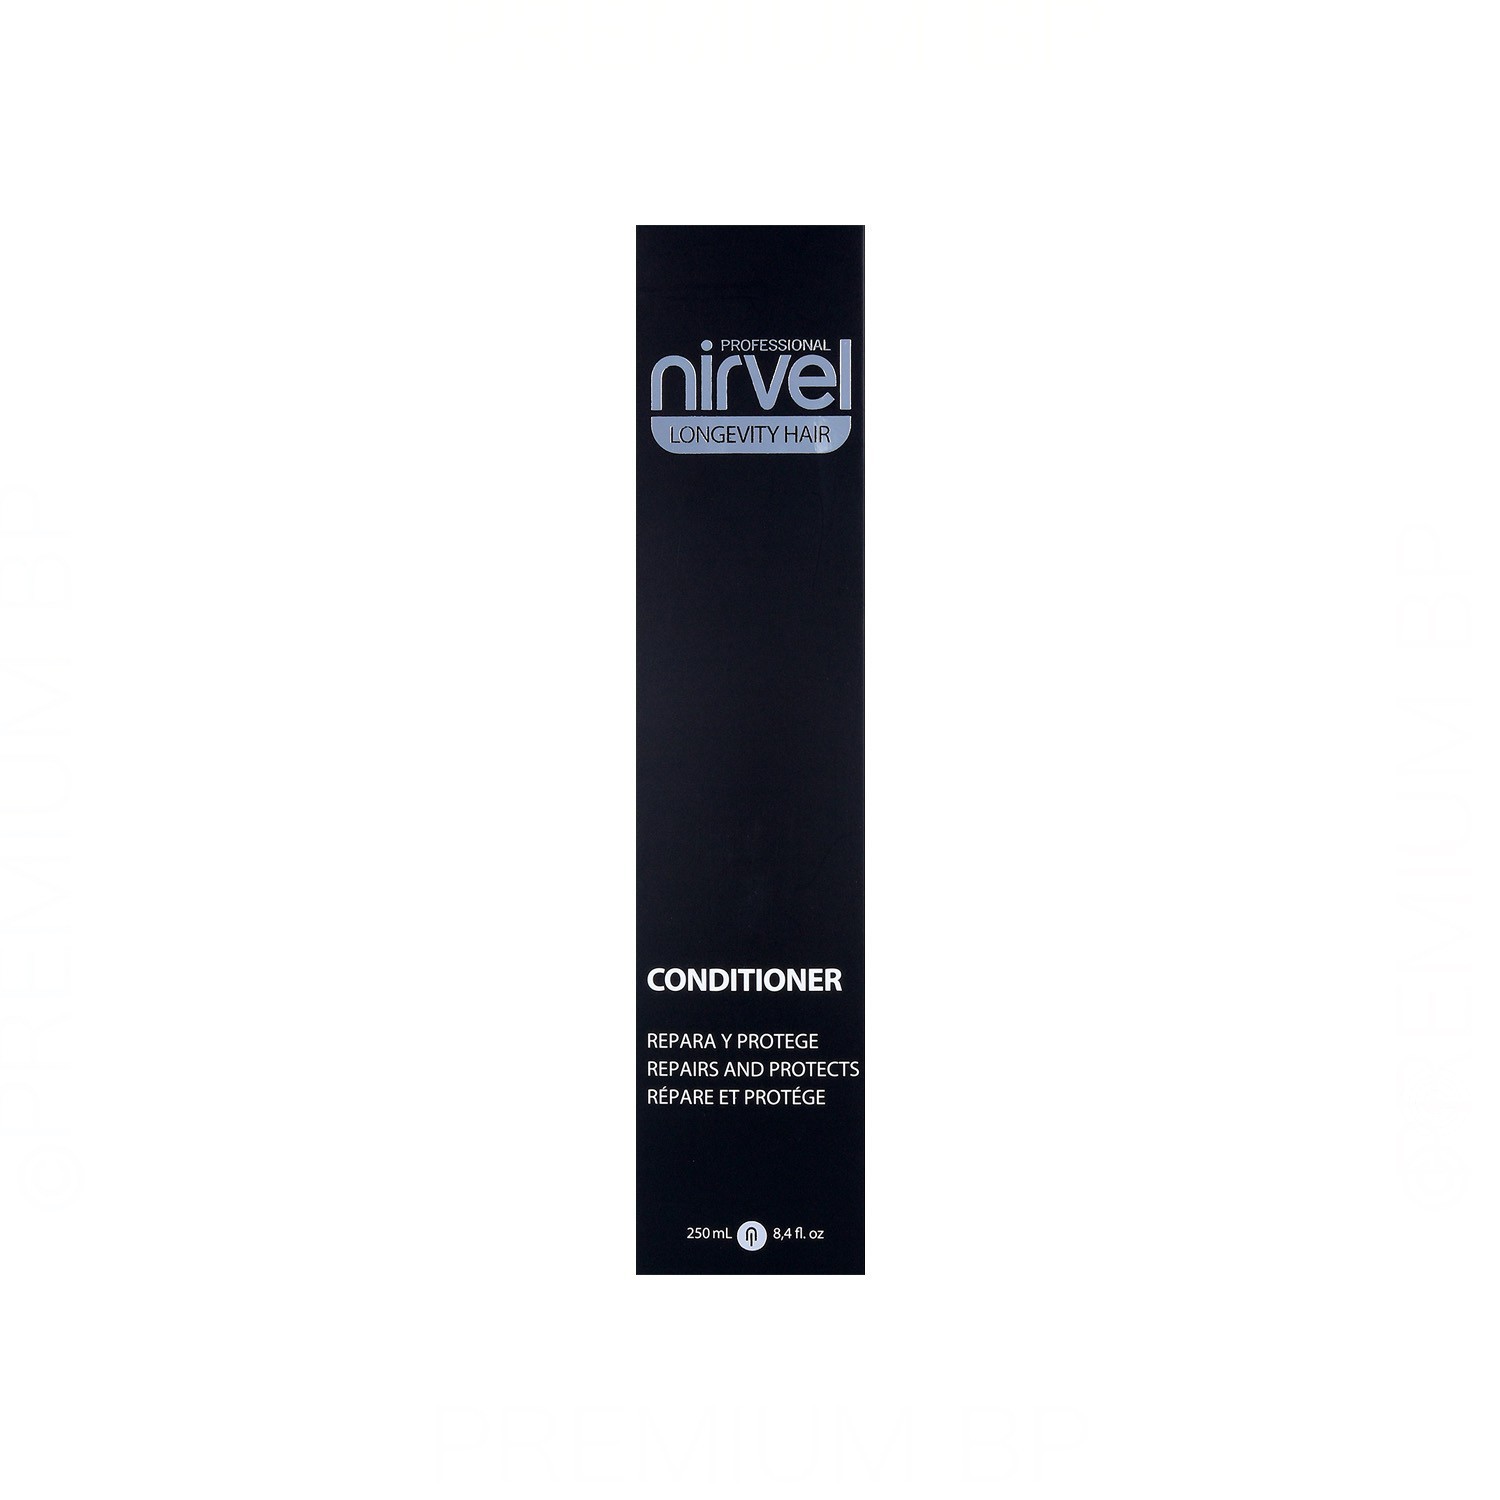 Nirvel Longevity Hair Conditioner 250 ml